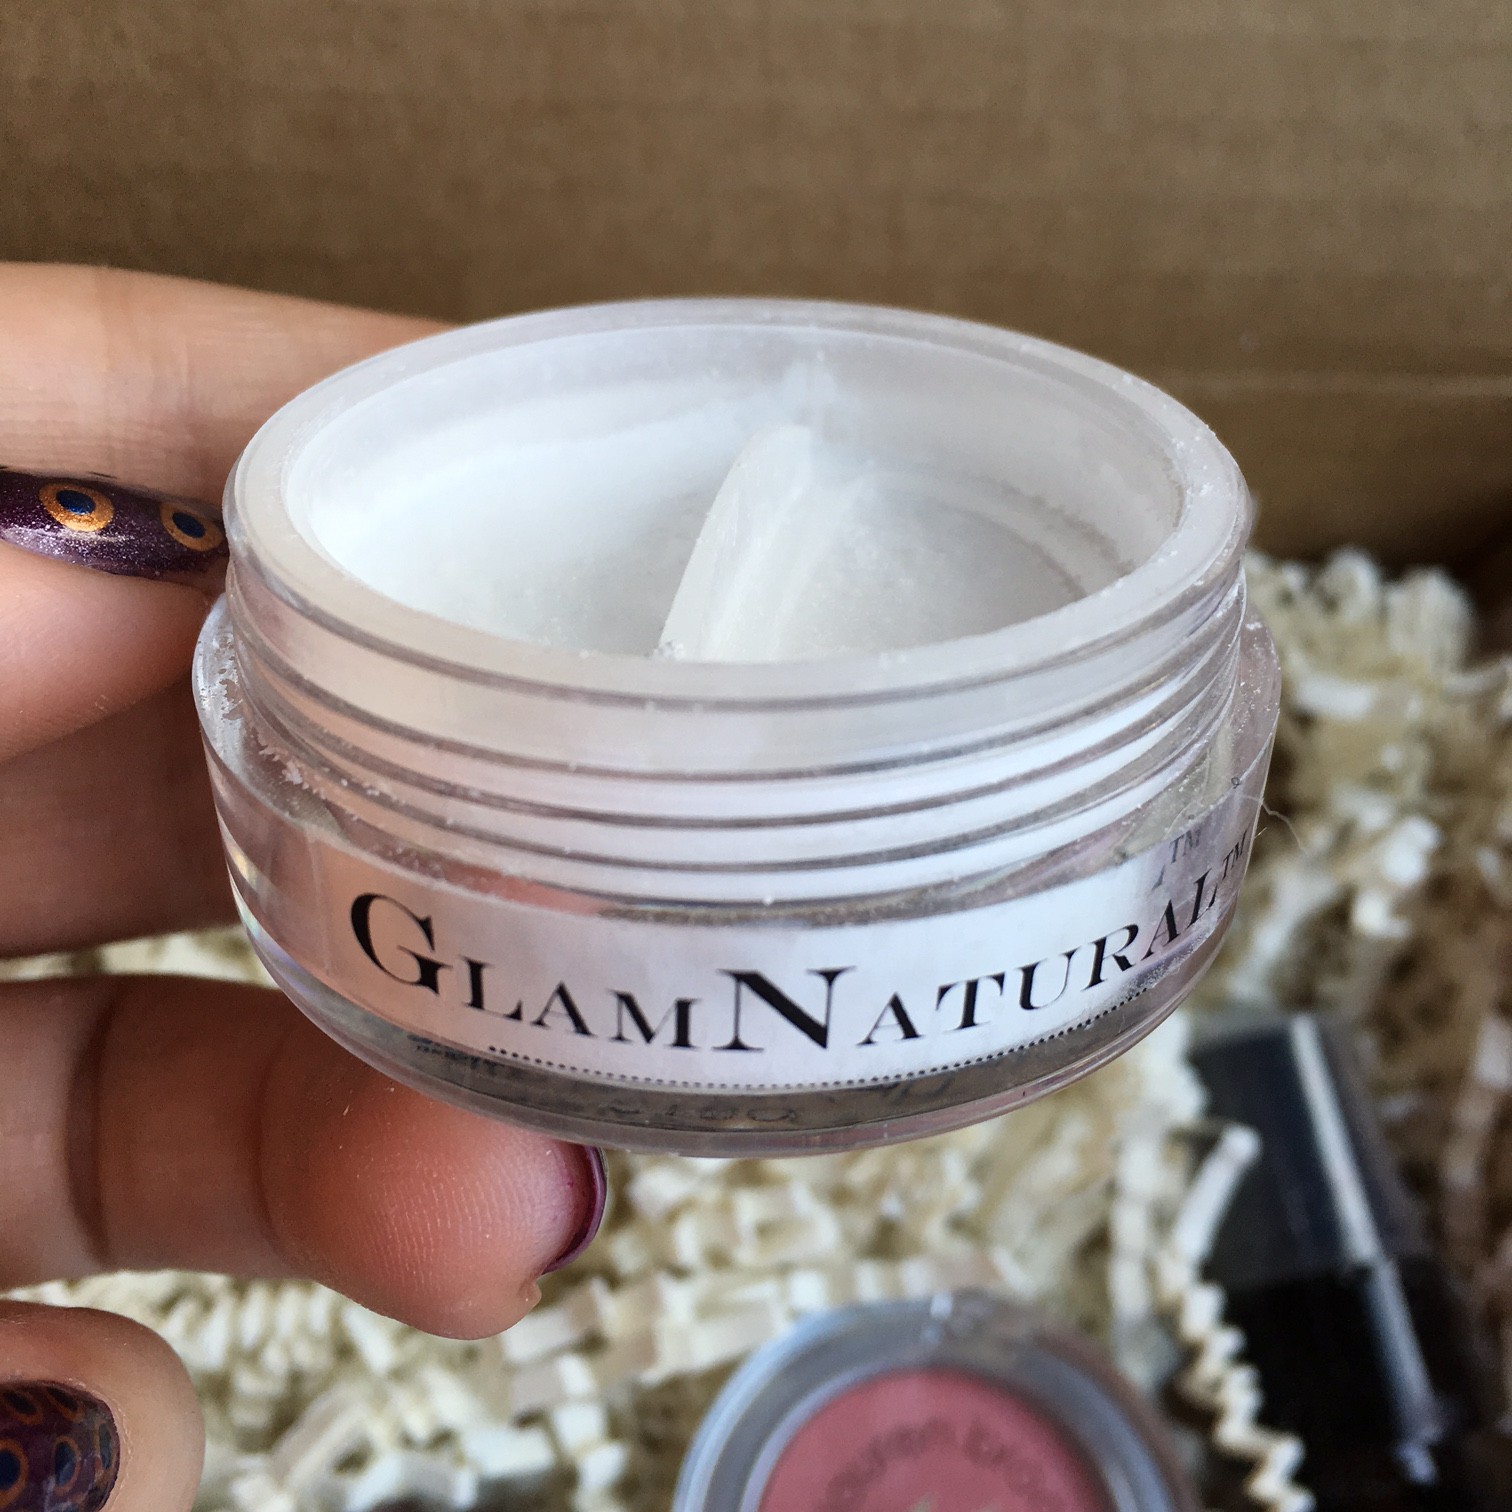 Glam Natural finishing powder